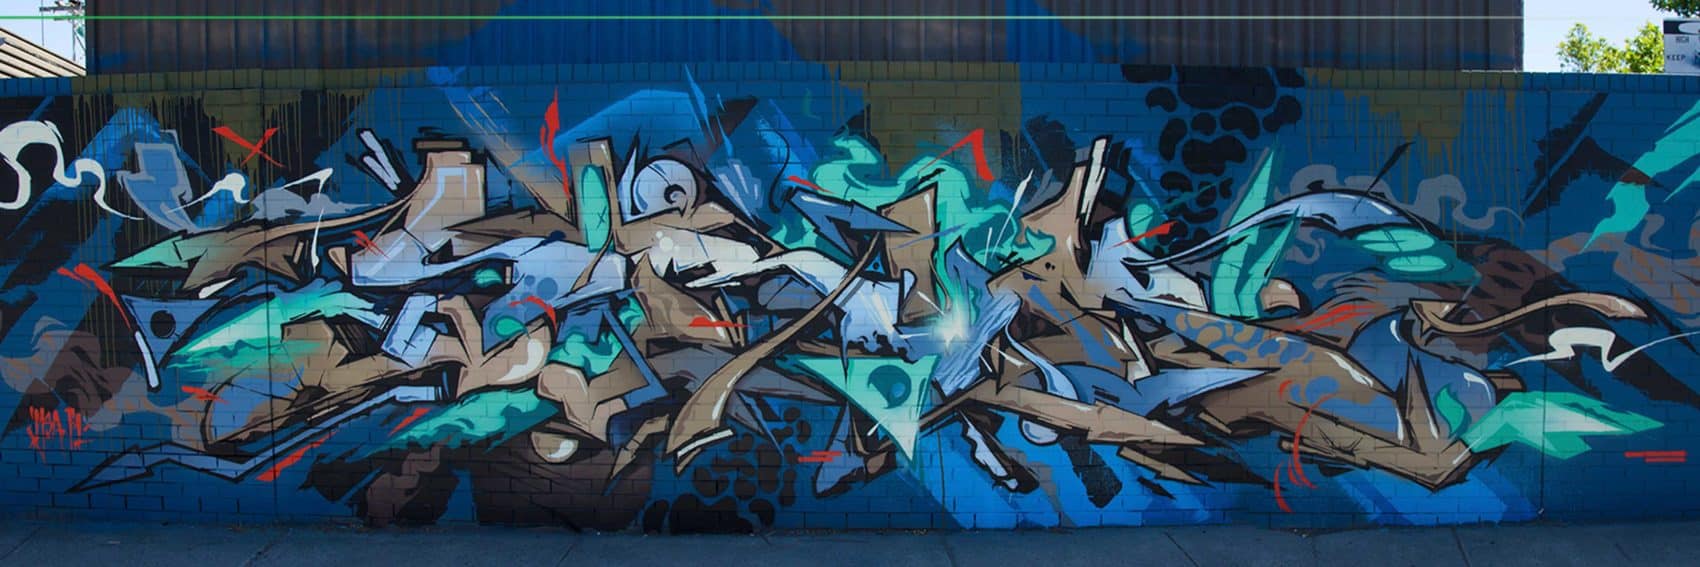 graffiti artist sirum